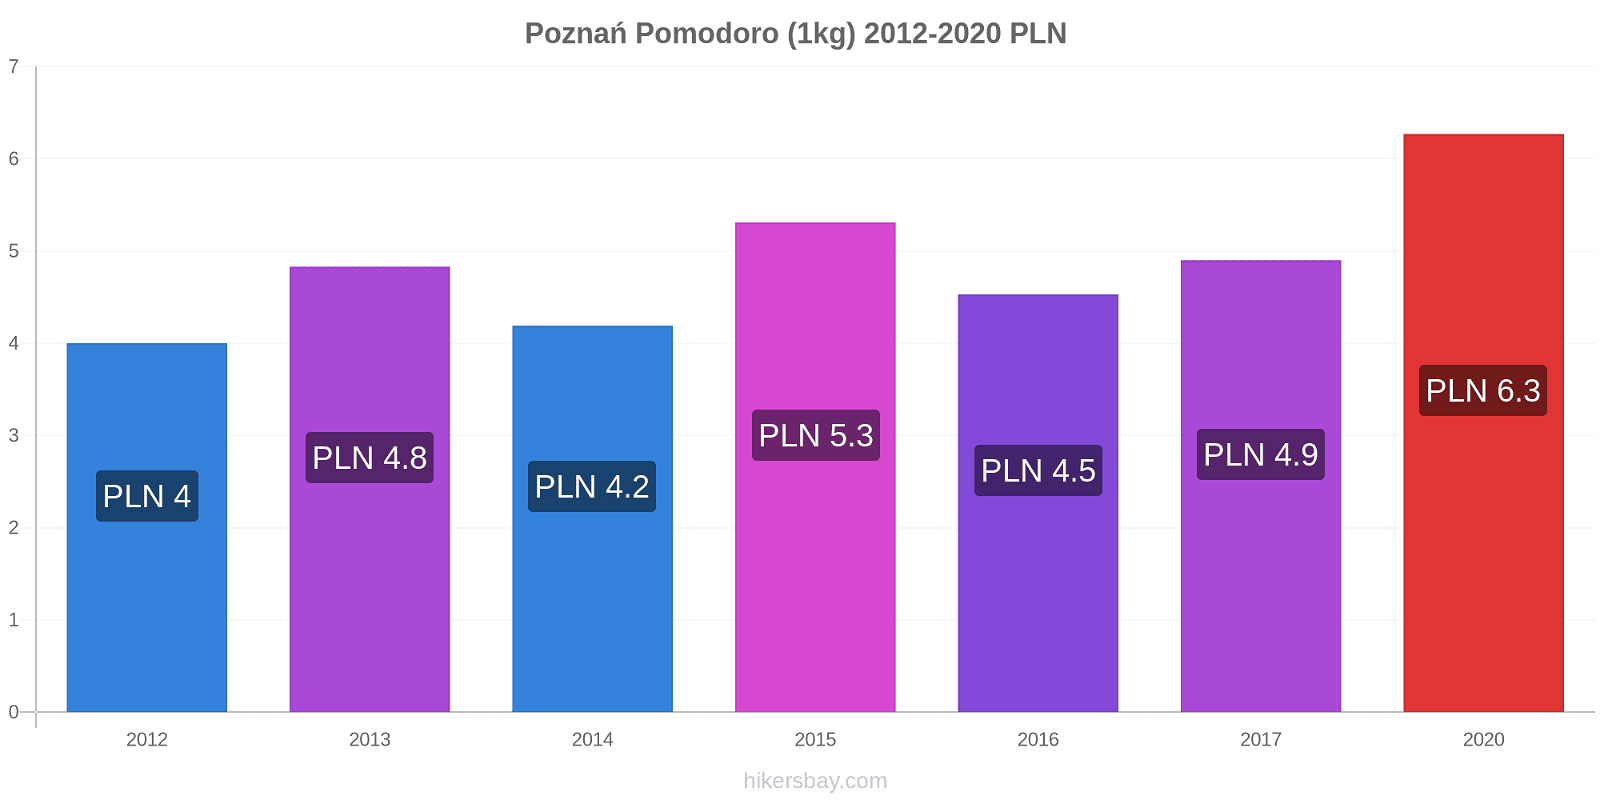 Poznań variazioni di prezzo Pomodoro (1kg) hikersbay.com